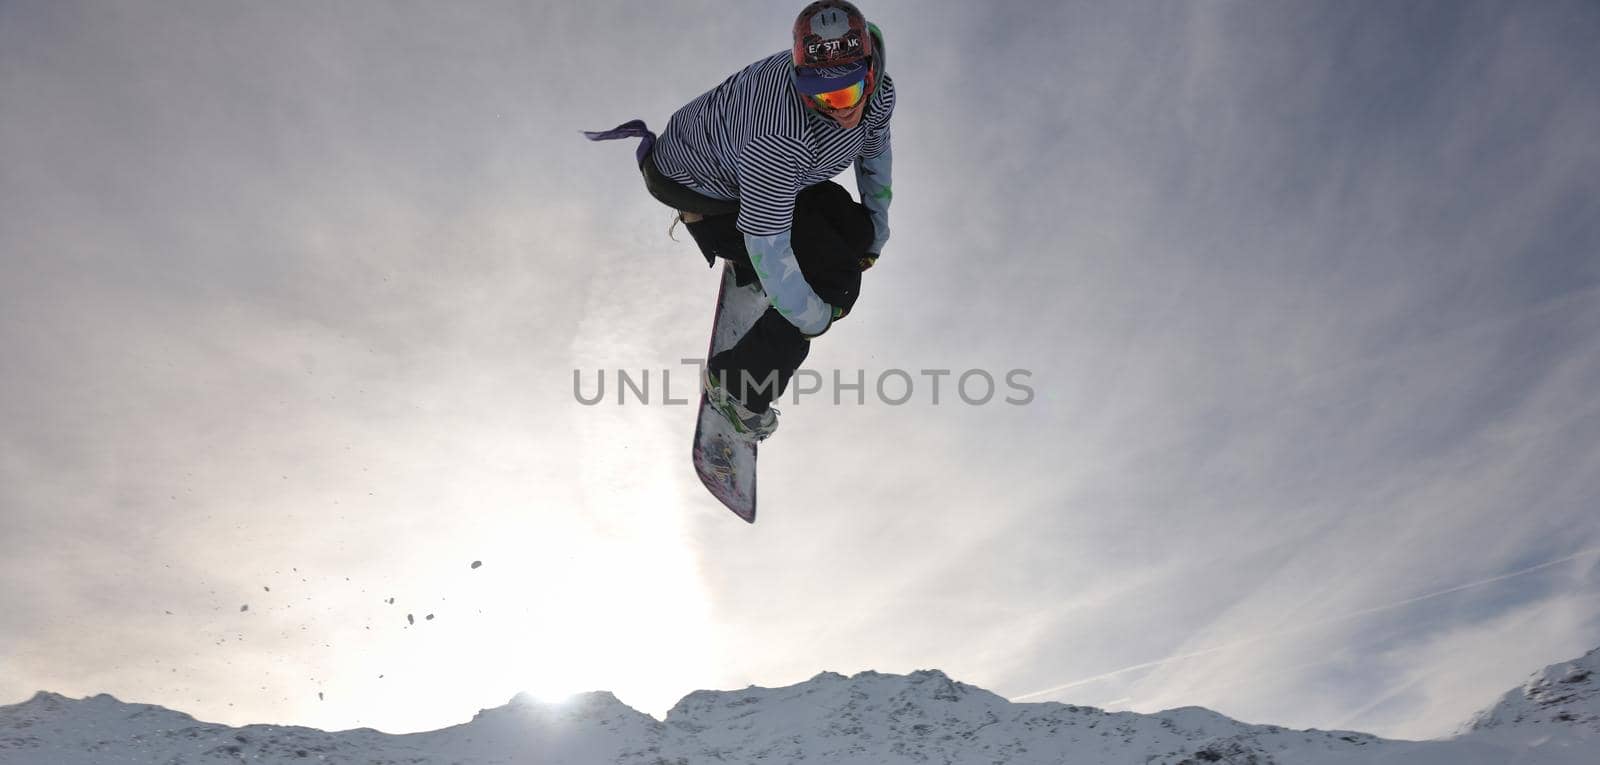 snowboarder extreme jump by dotshock